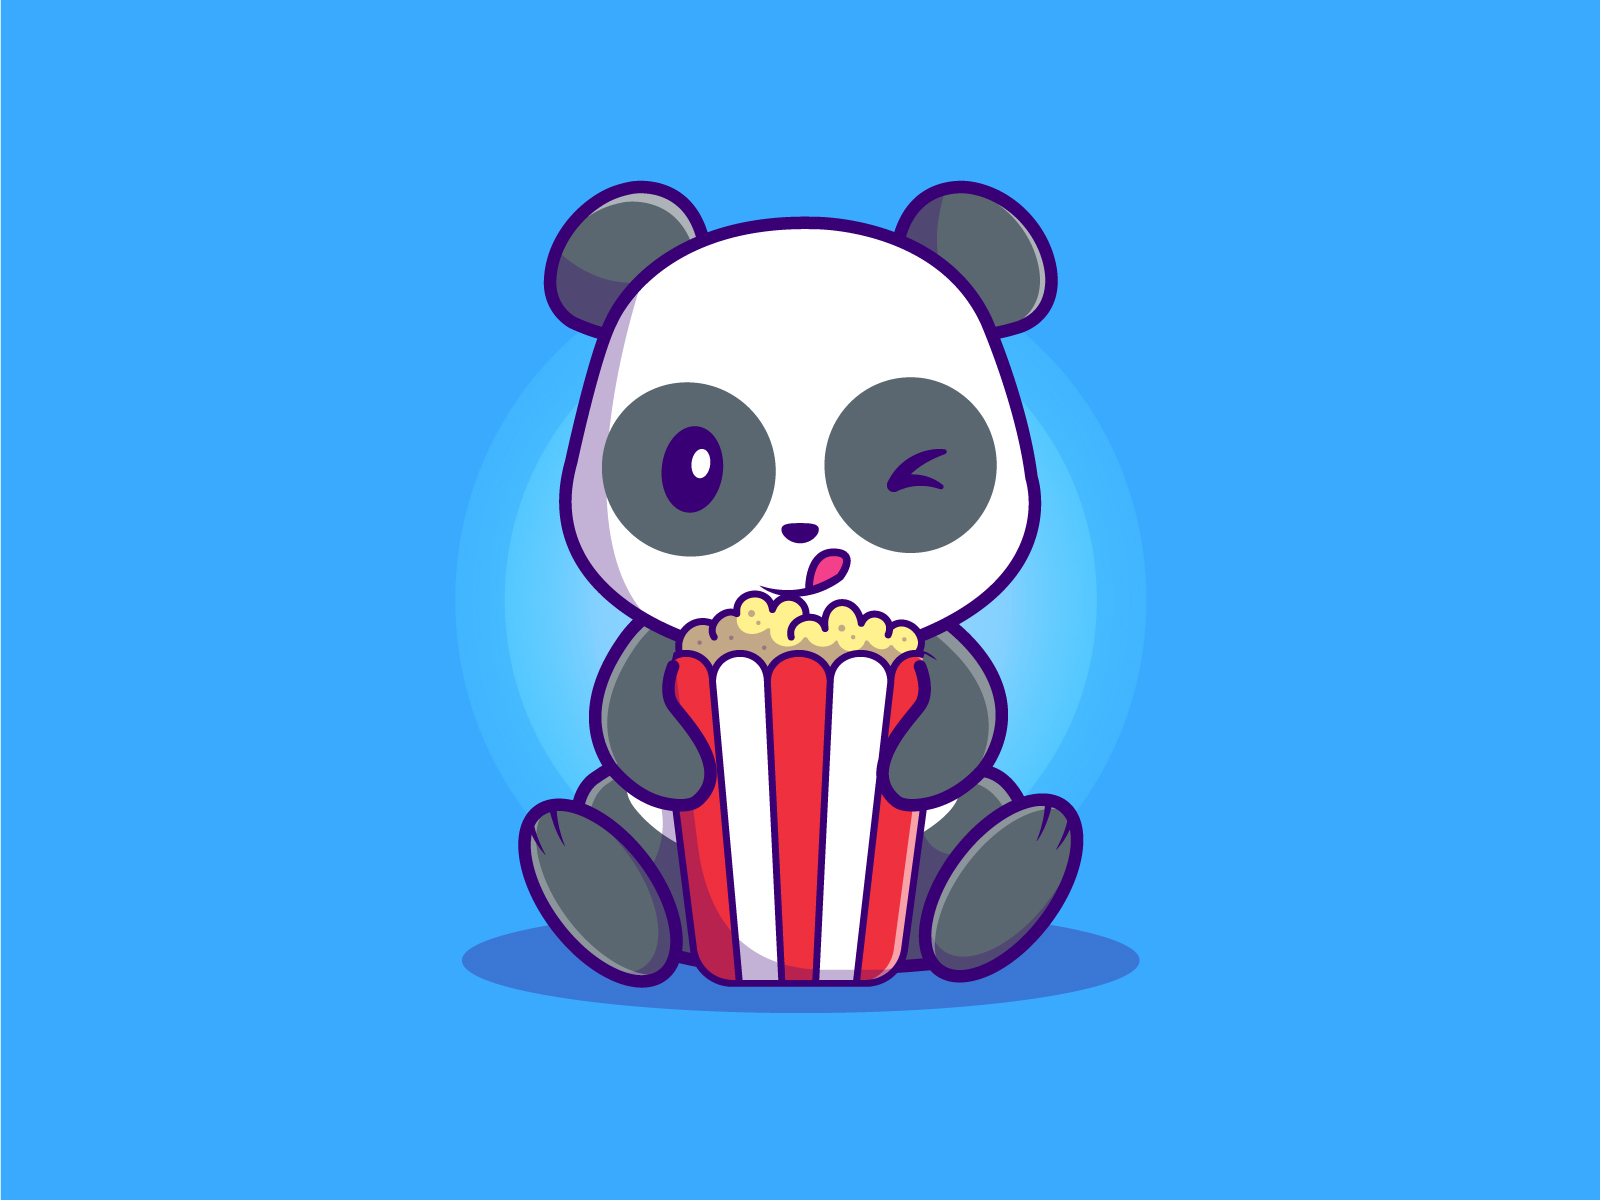 eating popcorn cartoon